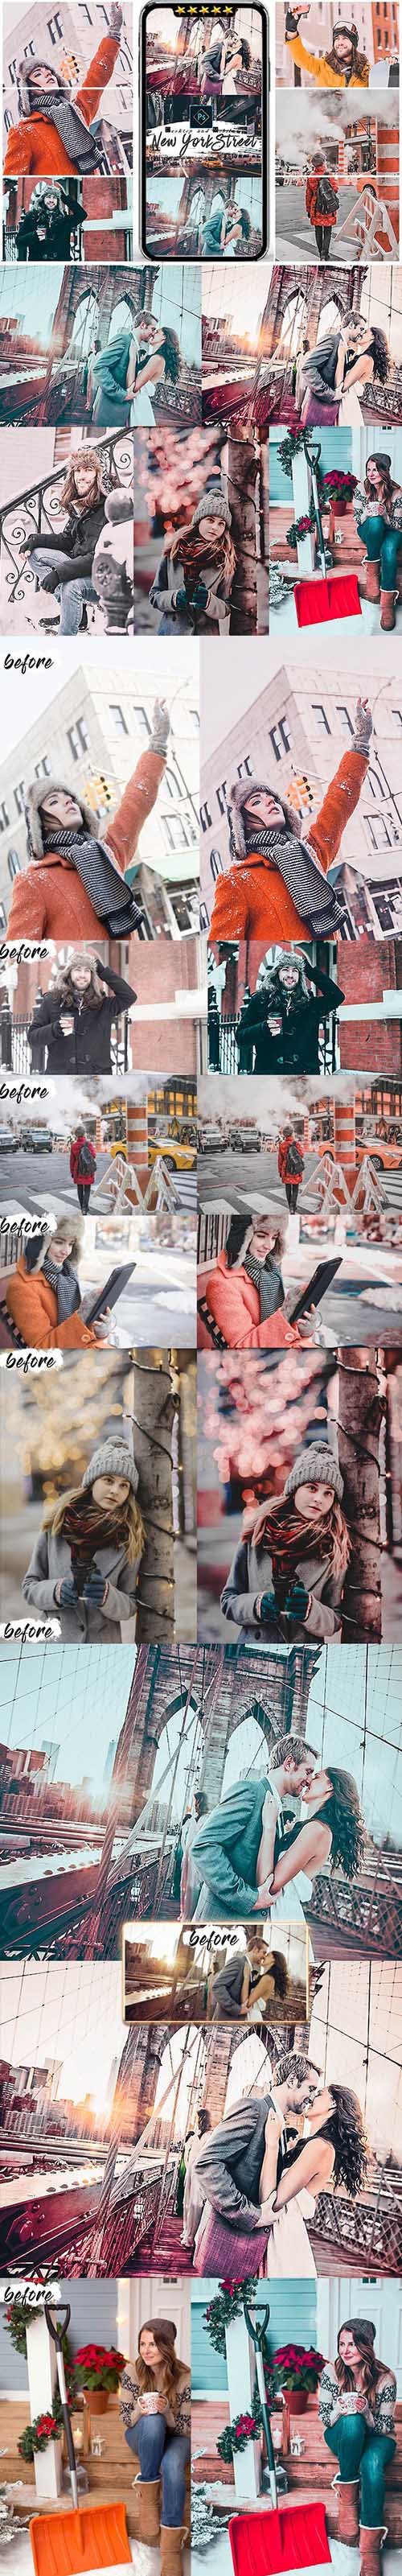 New York Mood Photoshop Actions 25578353